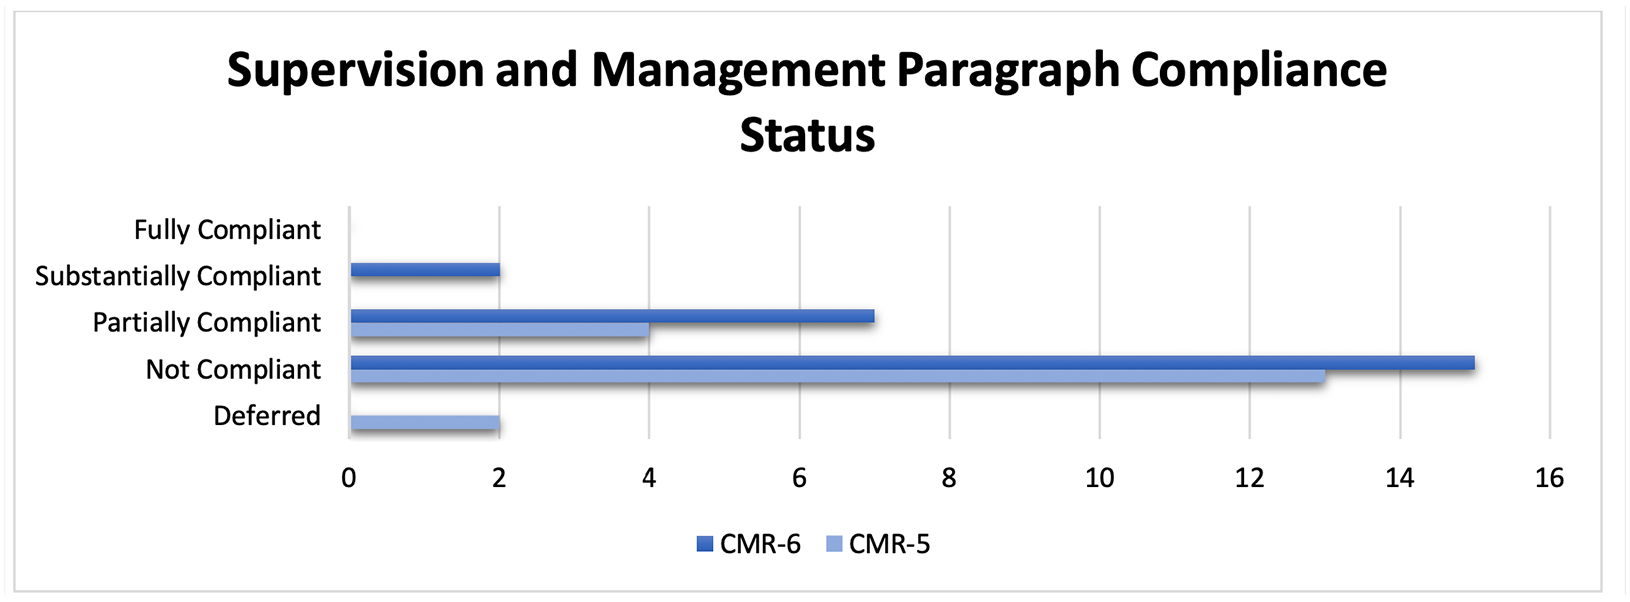 Figure 6. Supervision and Management: Paragraph Compliance Status